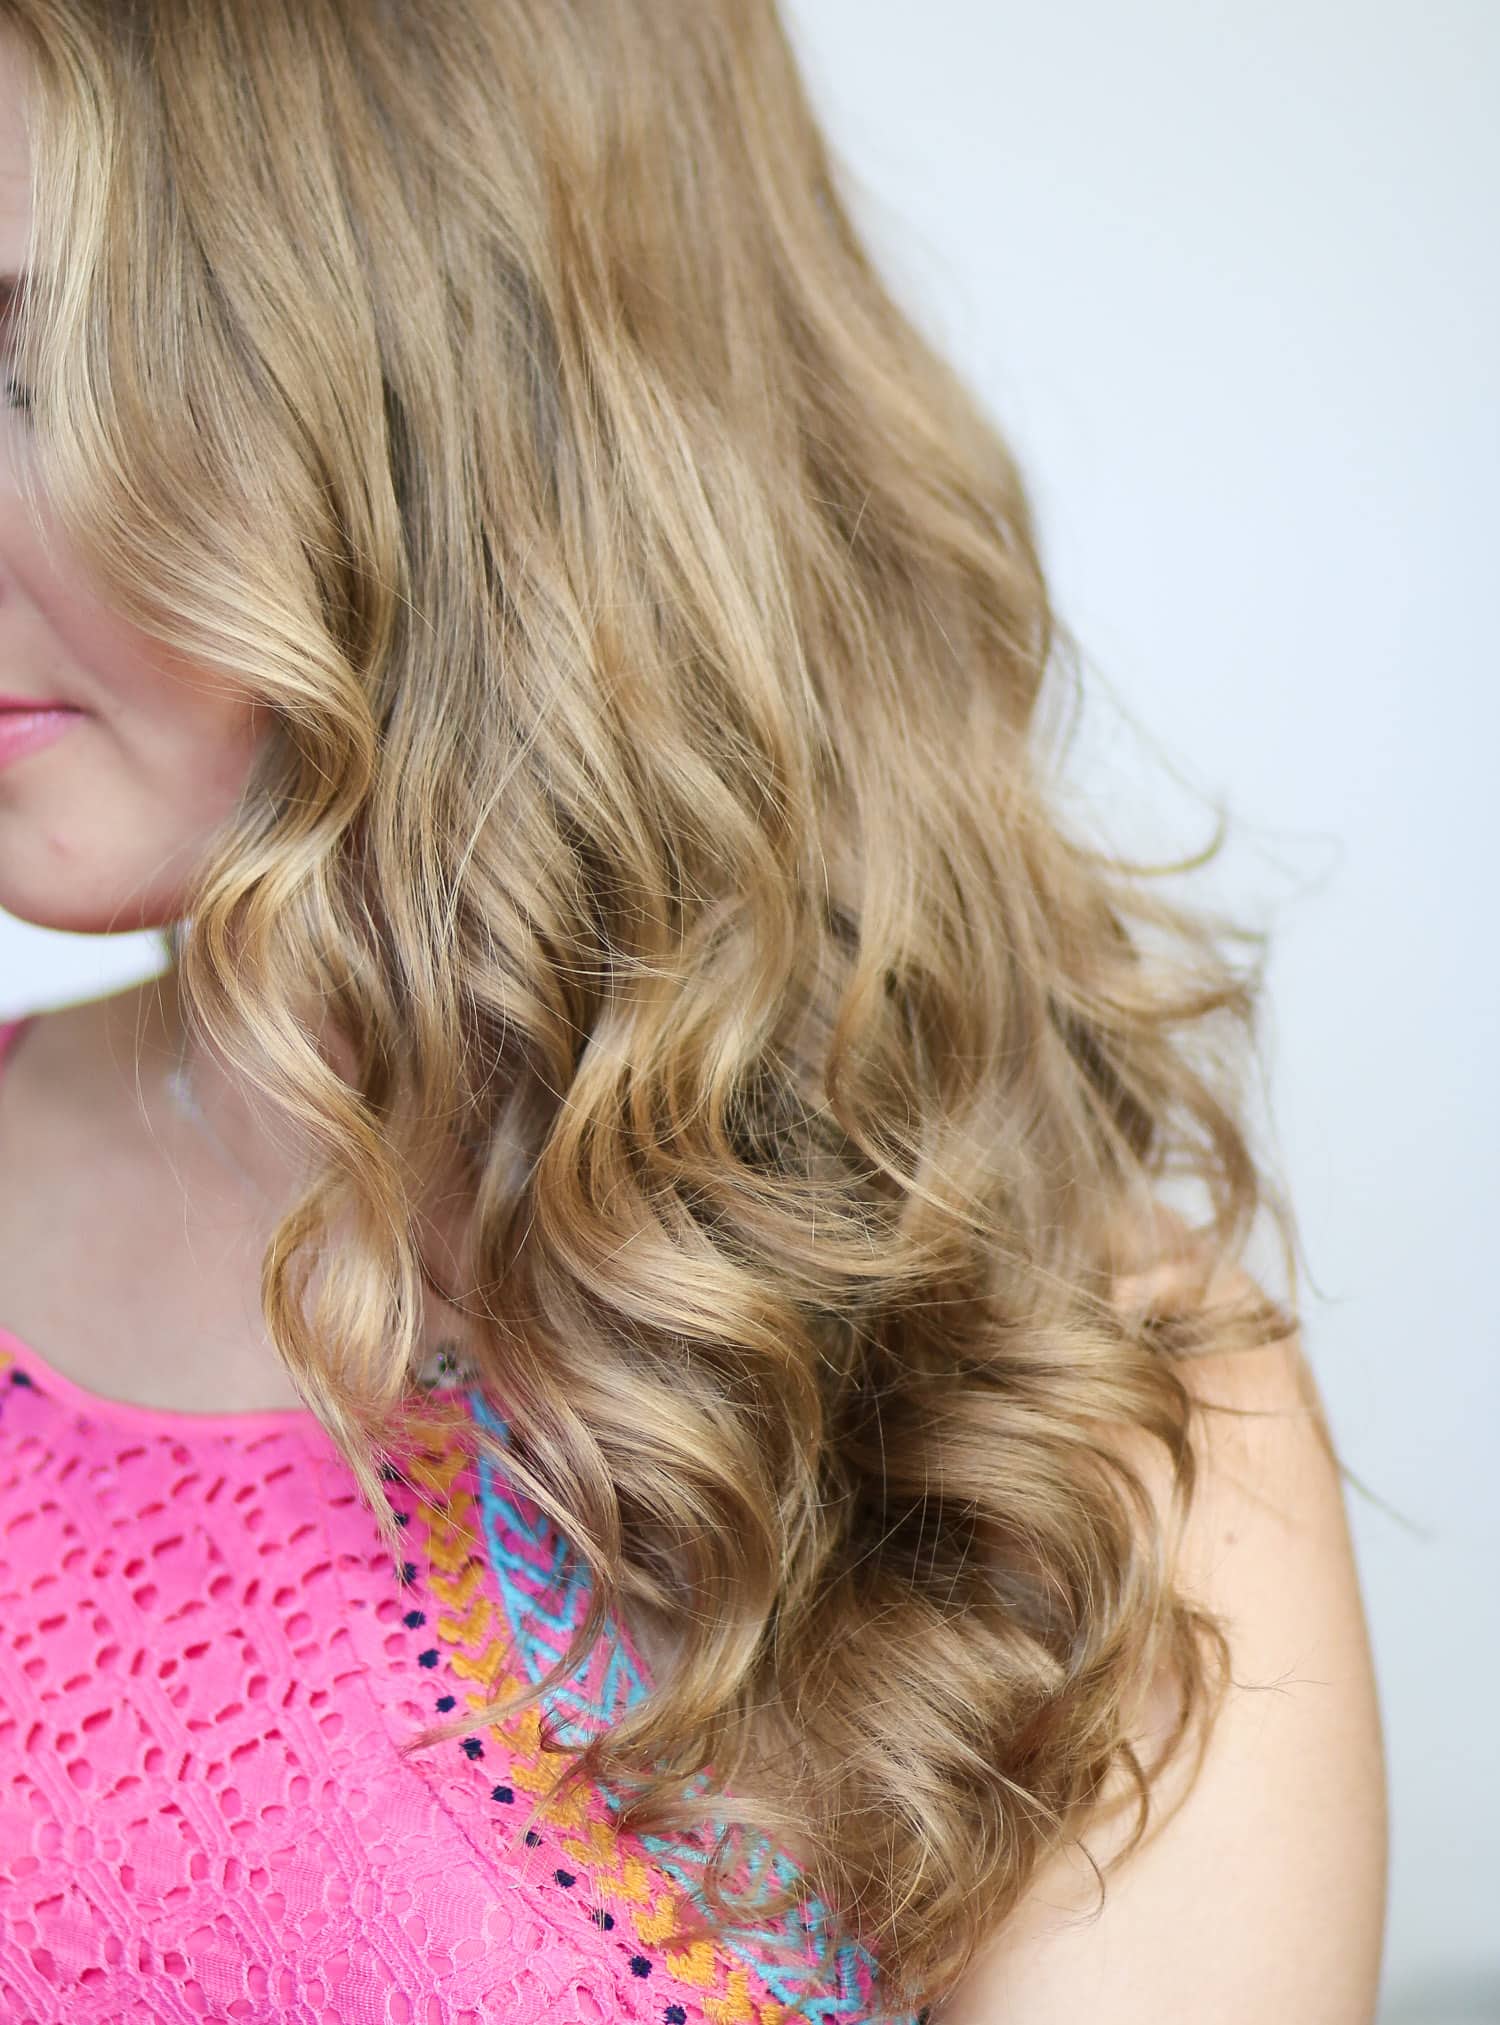 Beachy mermaid curls tutorial by beauty blogger Ashley Brooke from ashleybrookenicholas.com!